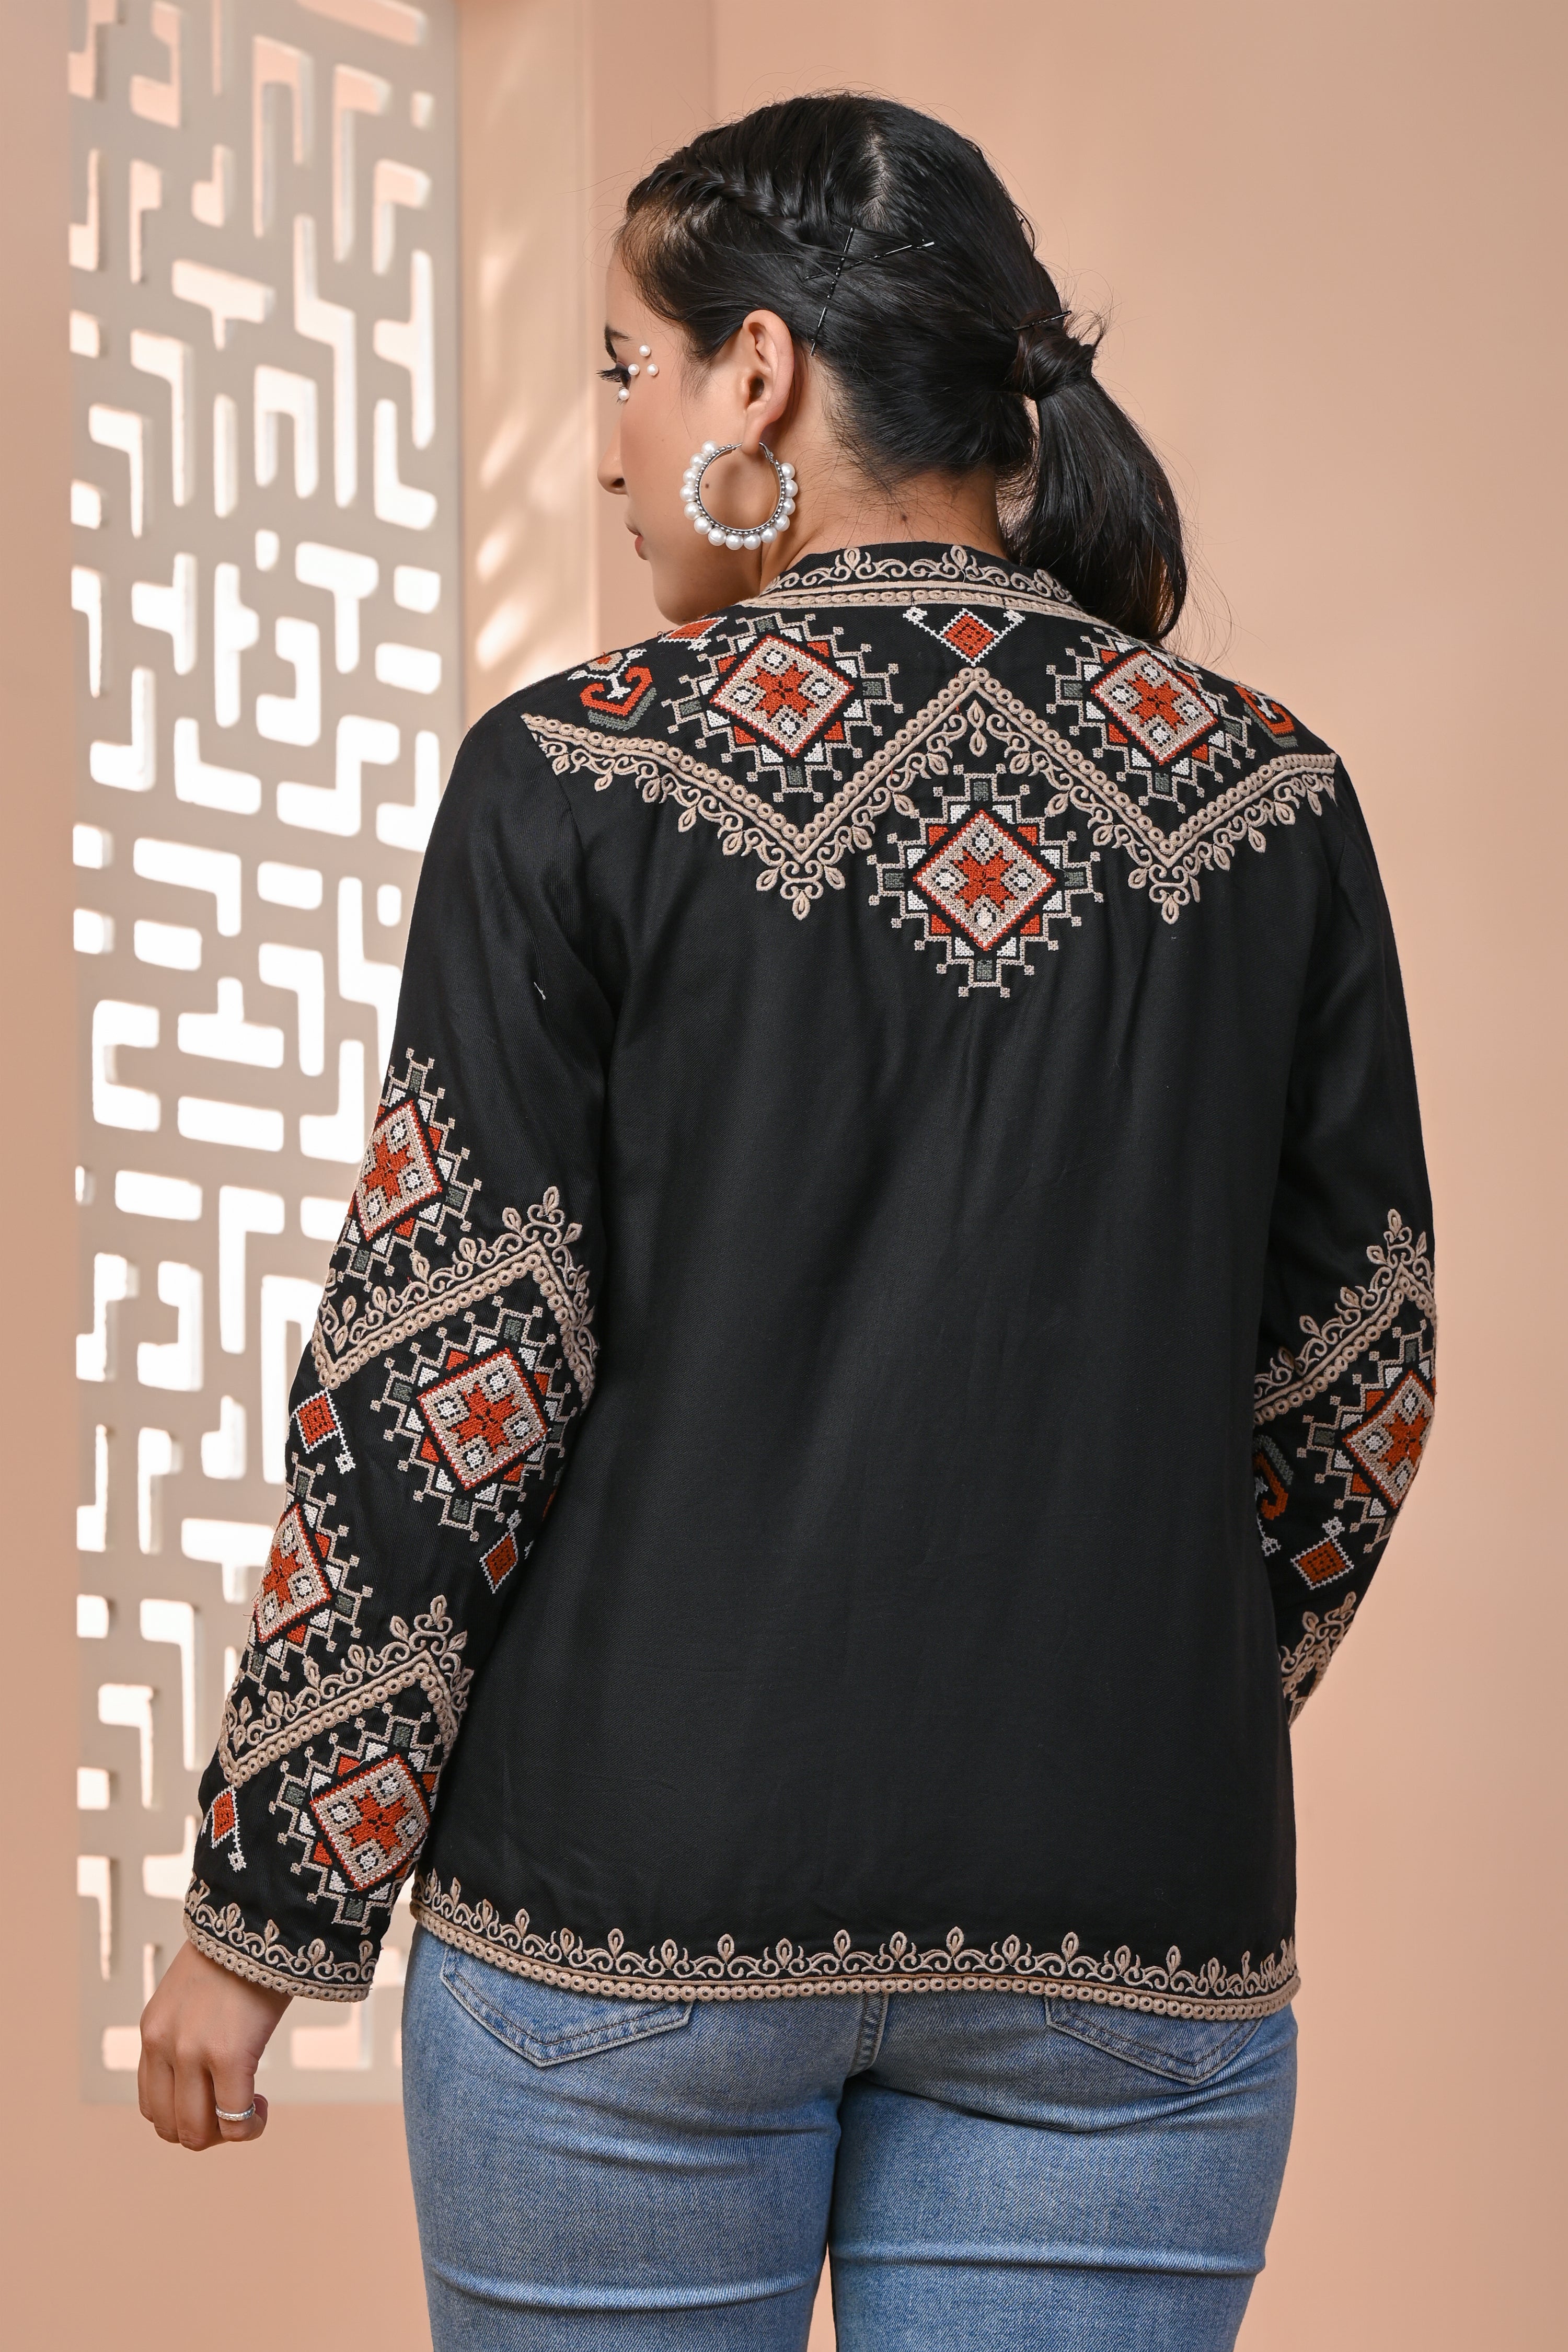 Mukta Cotton Embroidered Jacket - Kaftanize